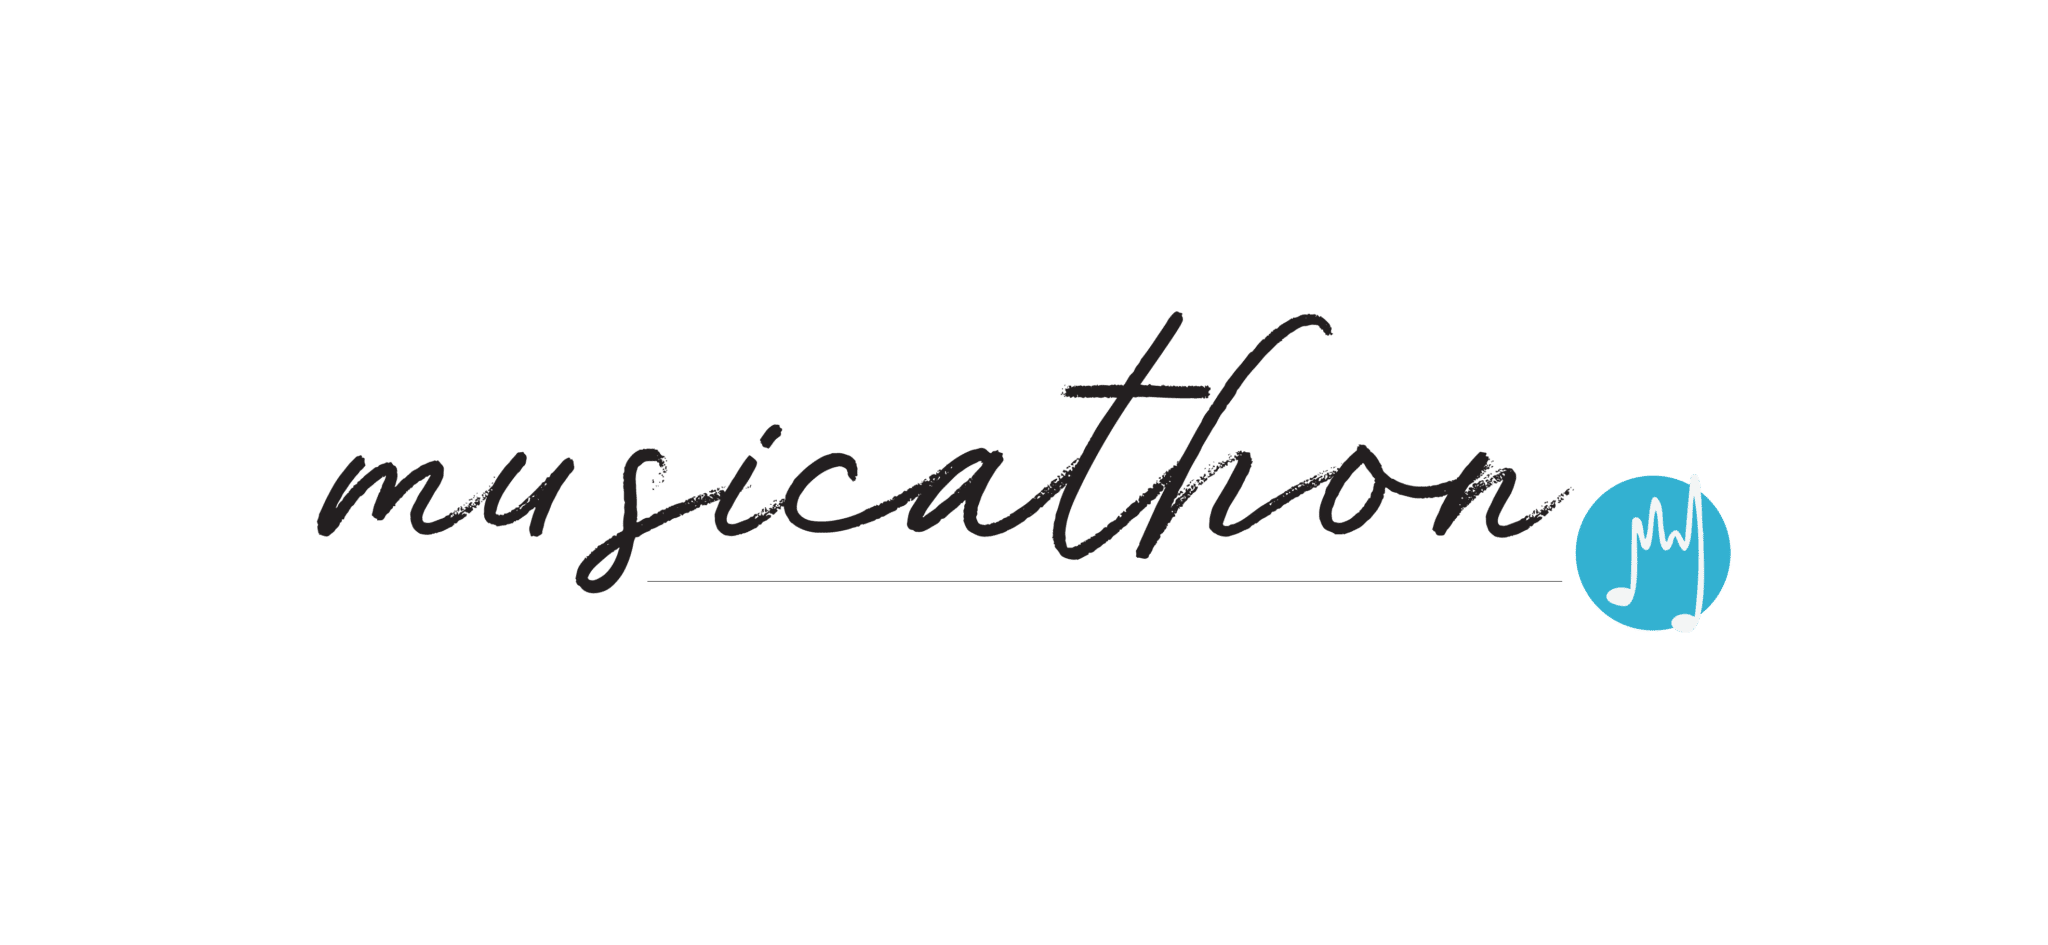 Musicathon Logo